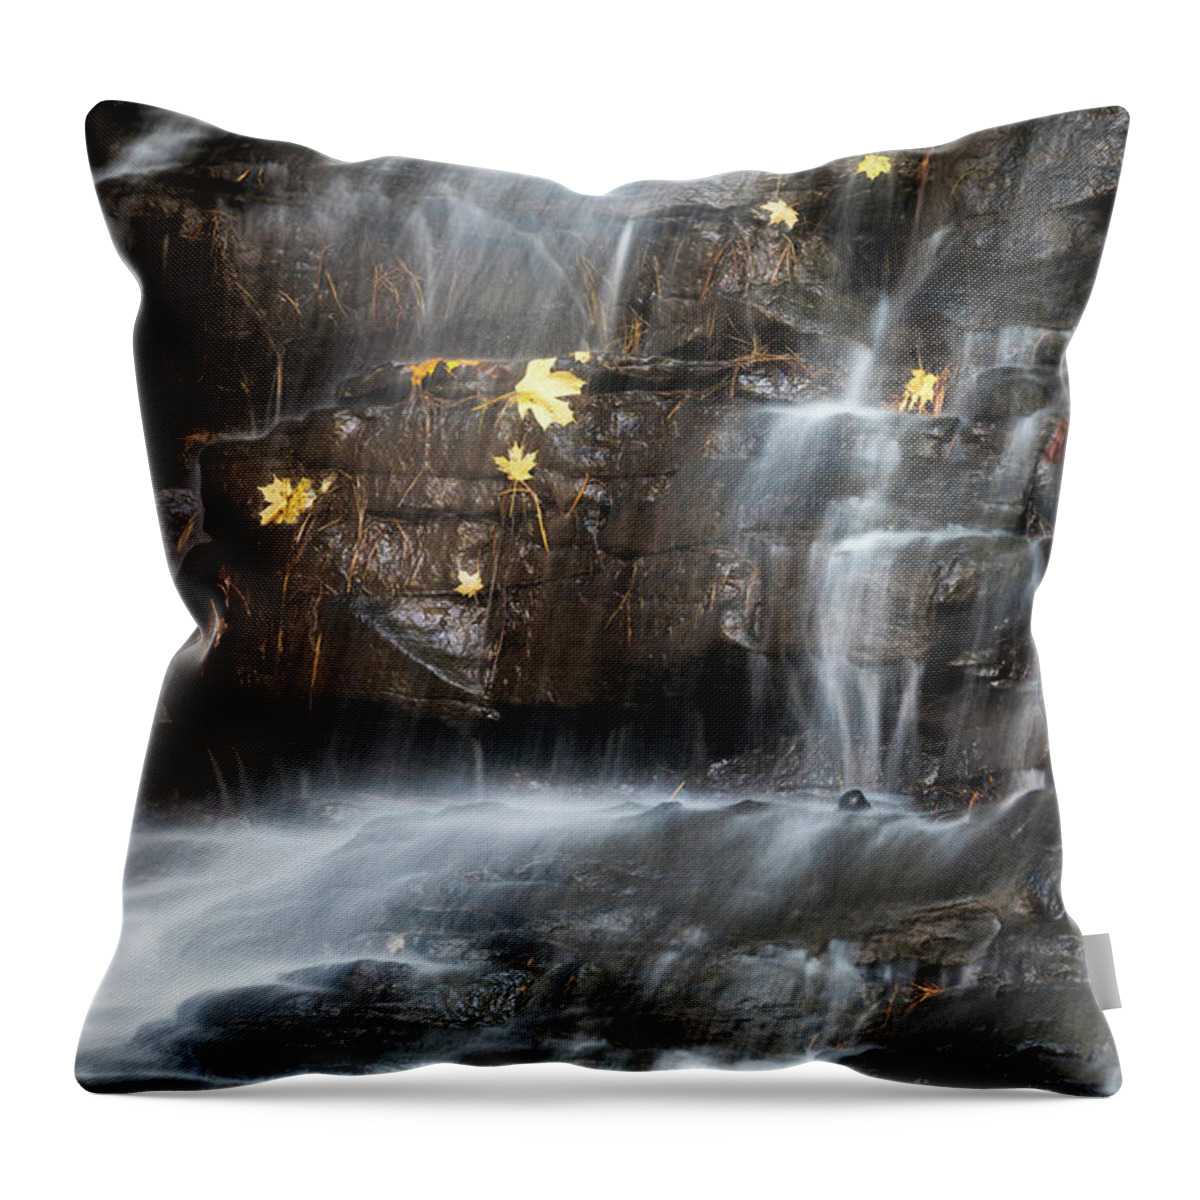 Honey Run Throw Pillow featuring the photograph Waterfall in Autumn Sunlight by Tom Mc Nemar